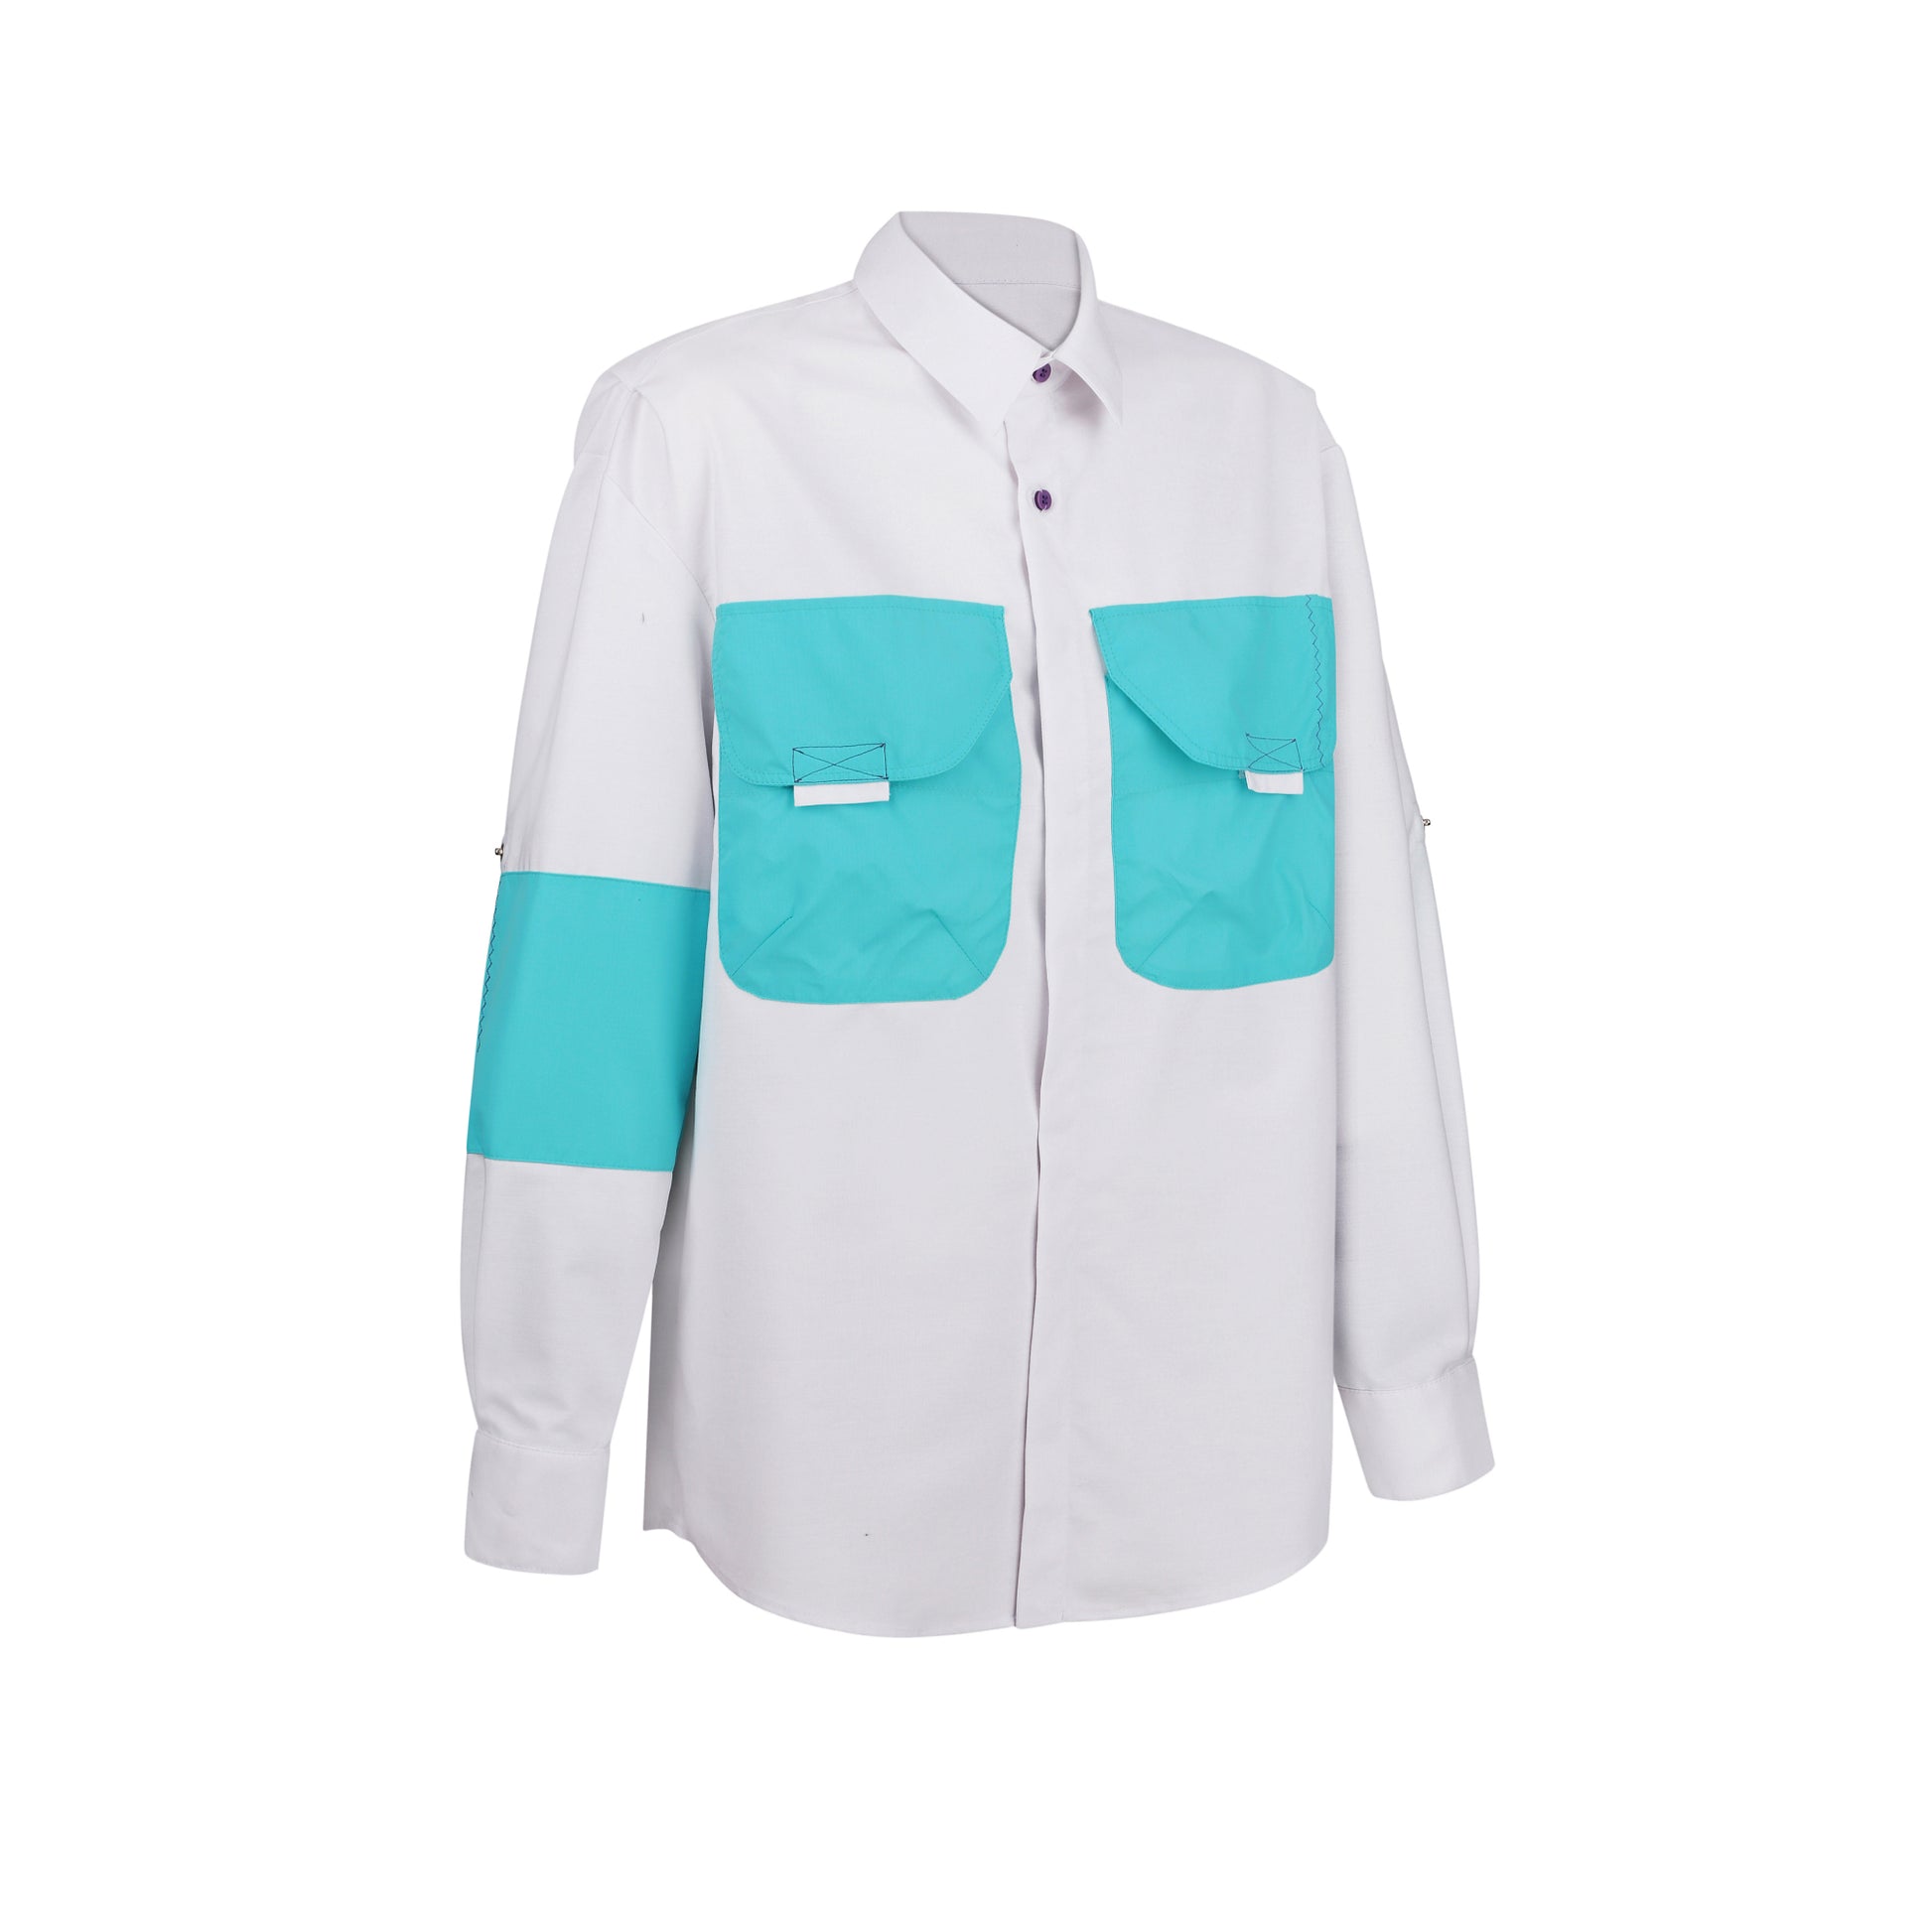 White & green stylish cotton cargo shirt with double pocket. REwind - made in Ukraine